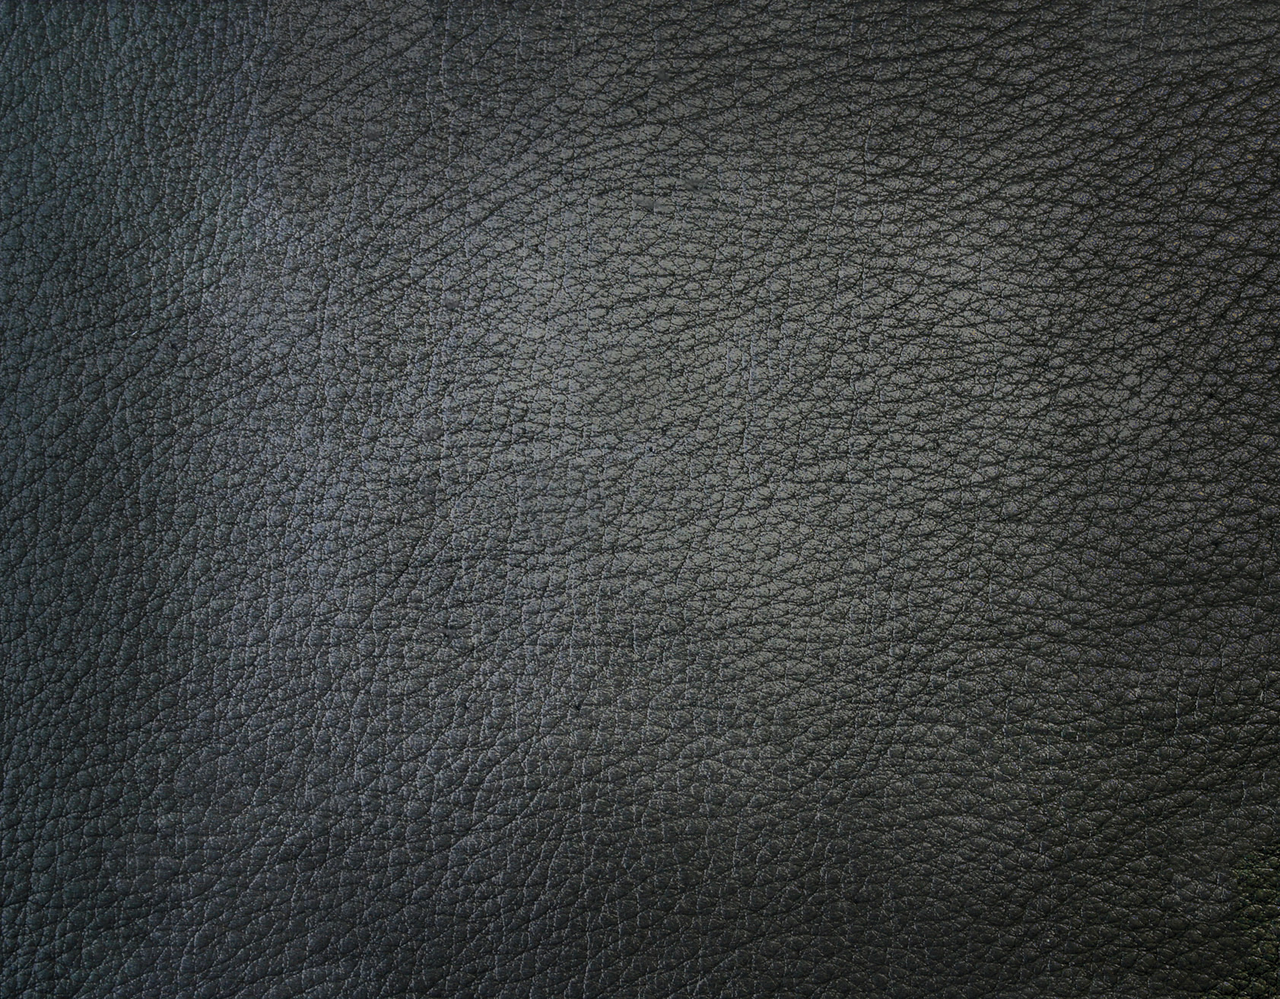 Black Leather Wallpaper by MKadriovski on